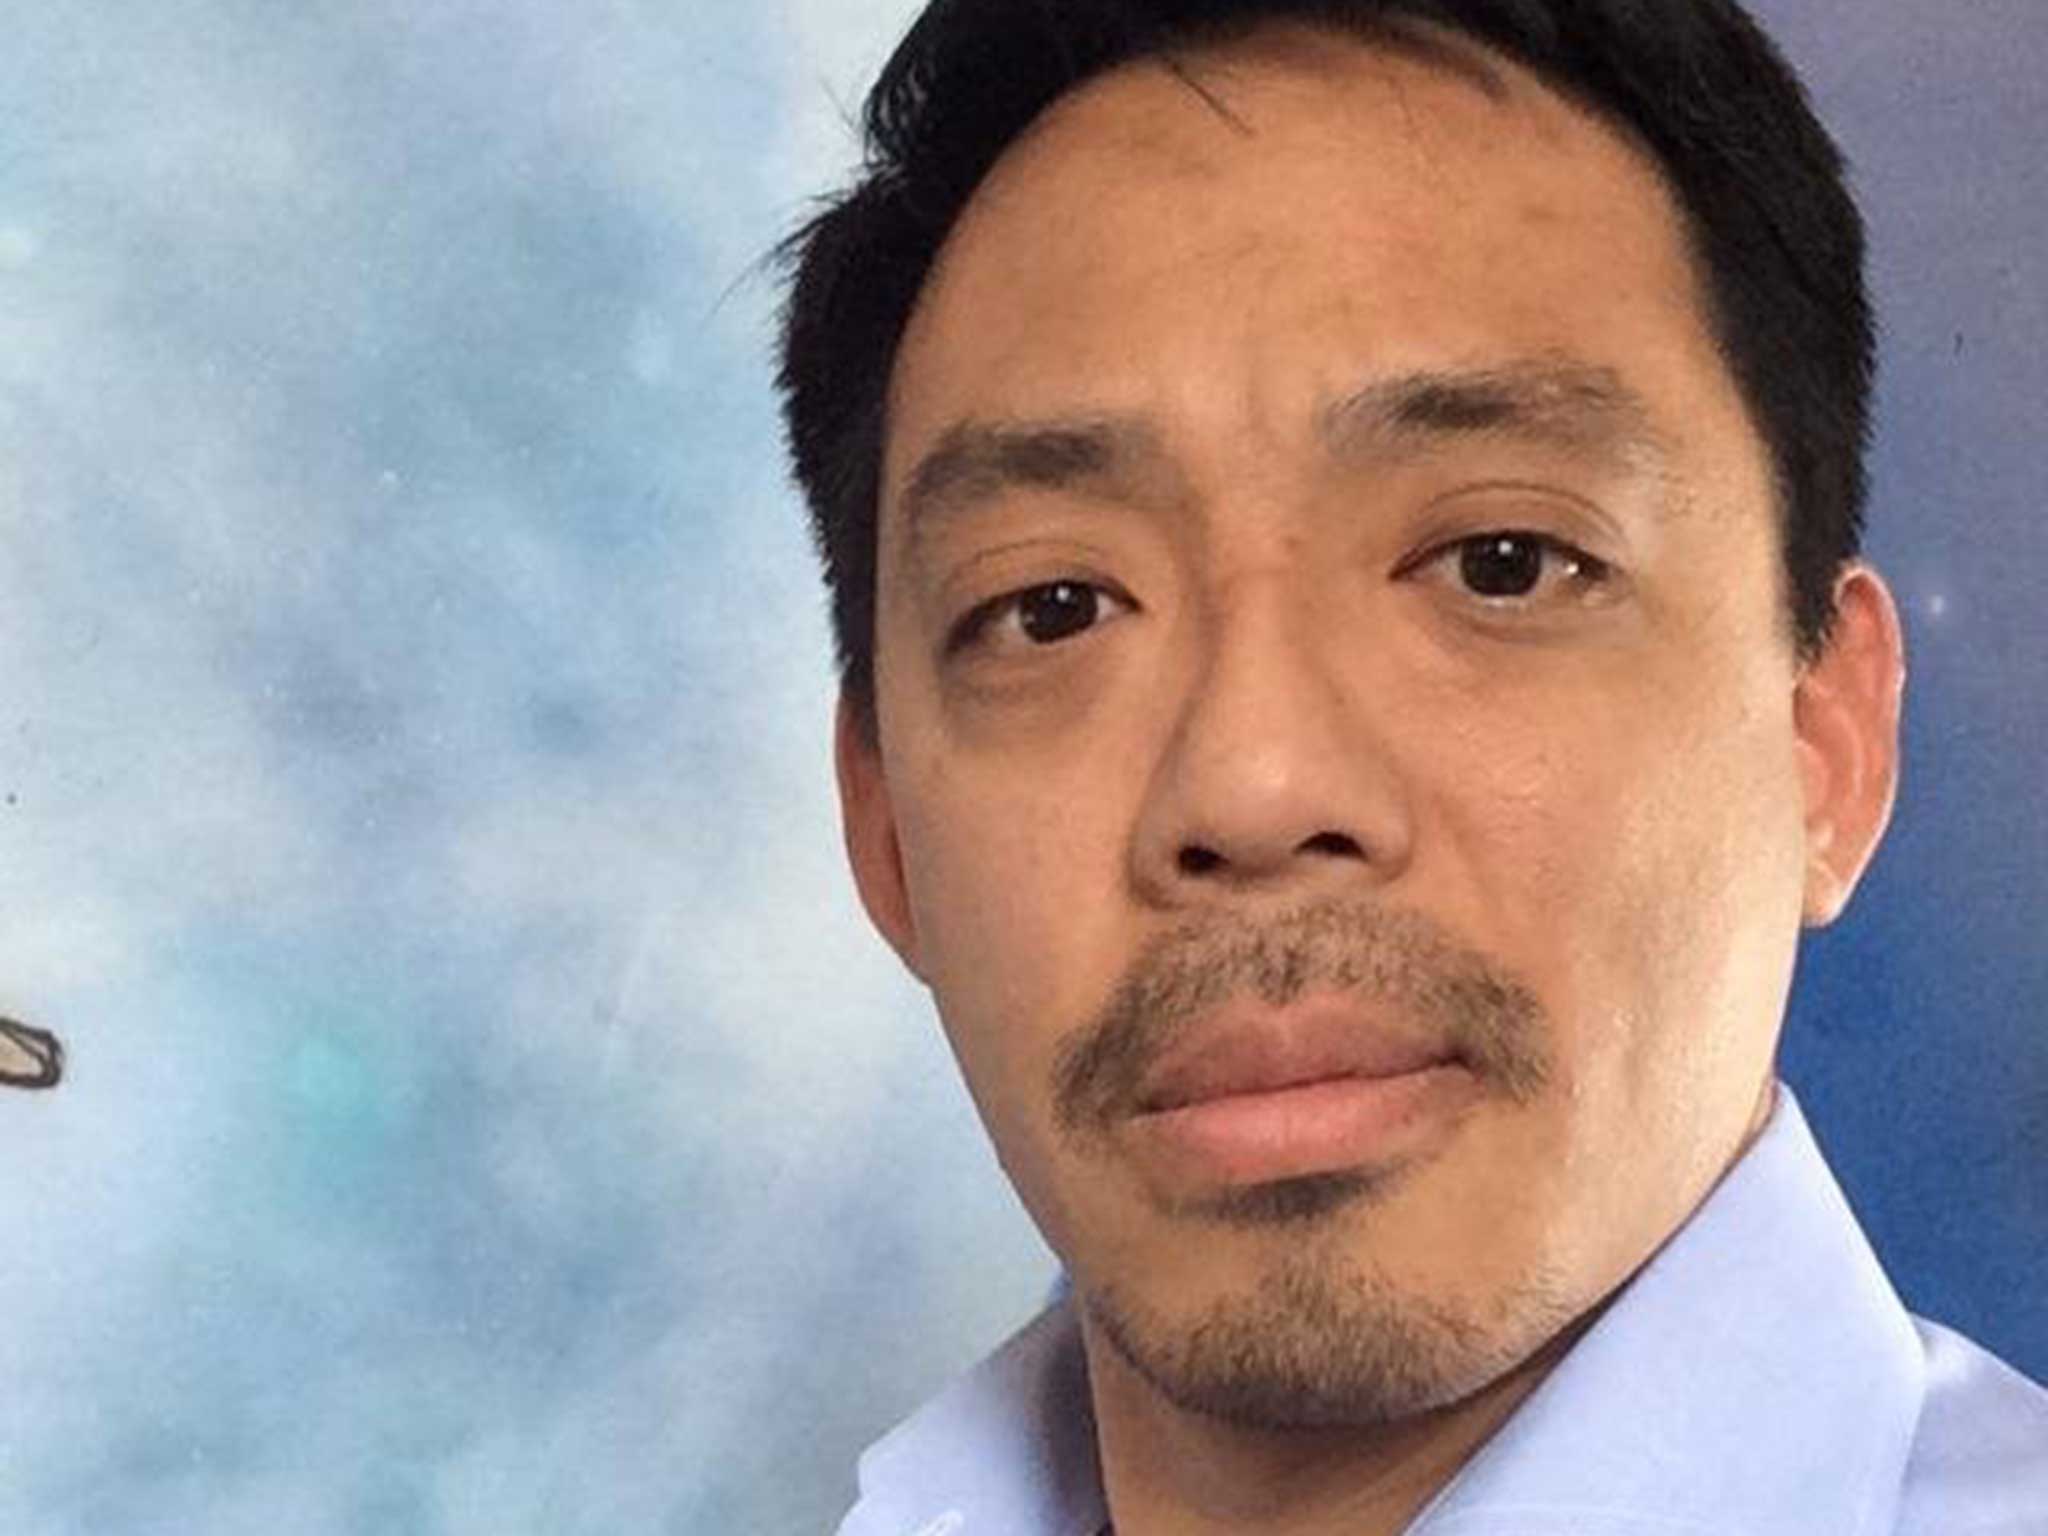 Reddit CEO Yishan Wong has resigned